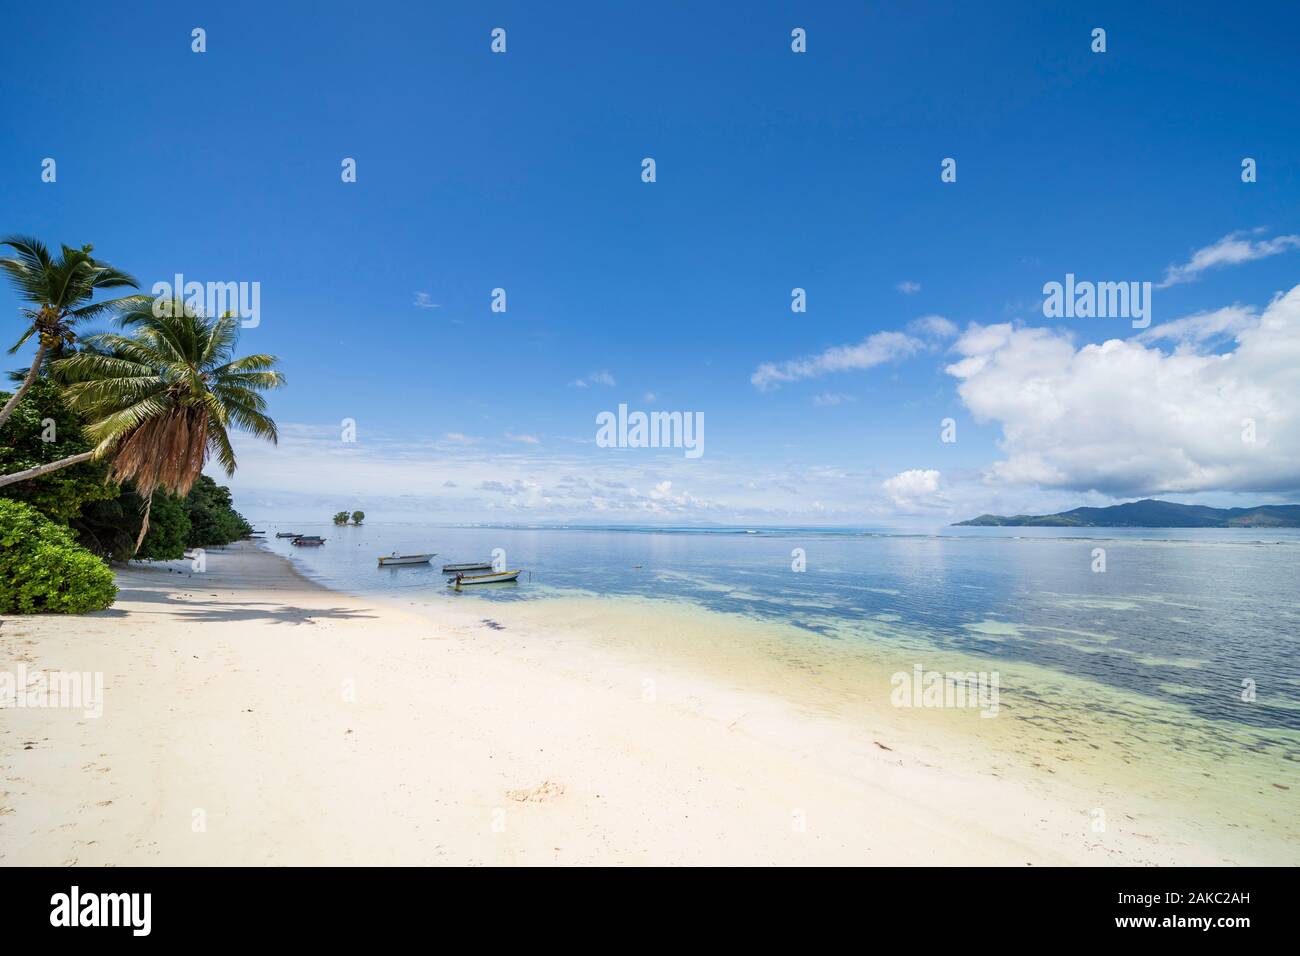 Seychelles, La Digue Island, coconut palms and fishing boats in the Anse de la Reunion Stock Photo